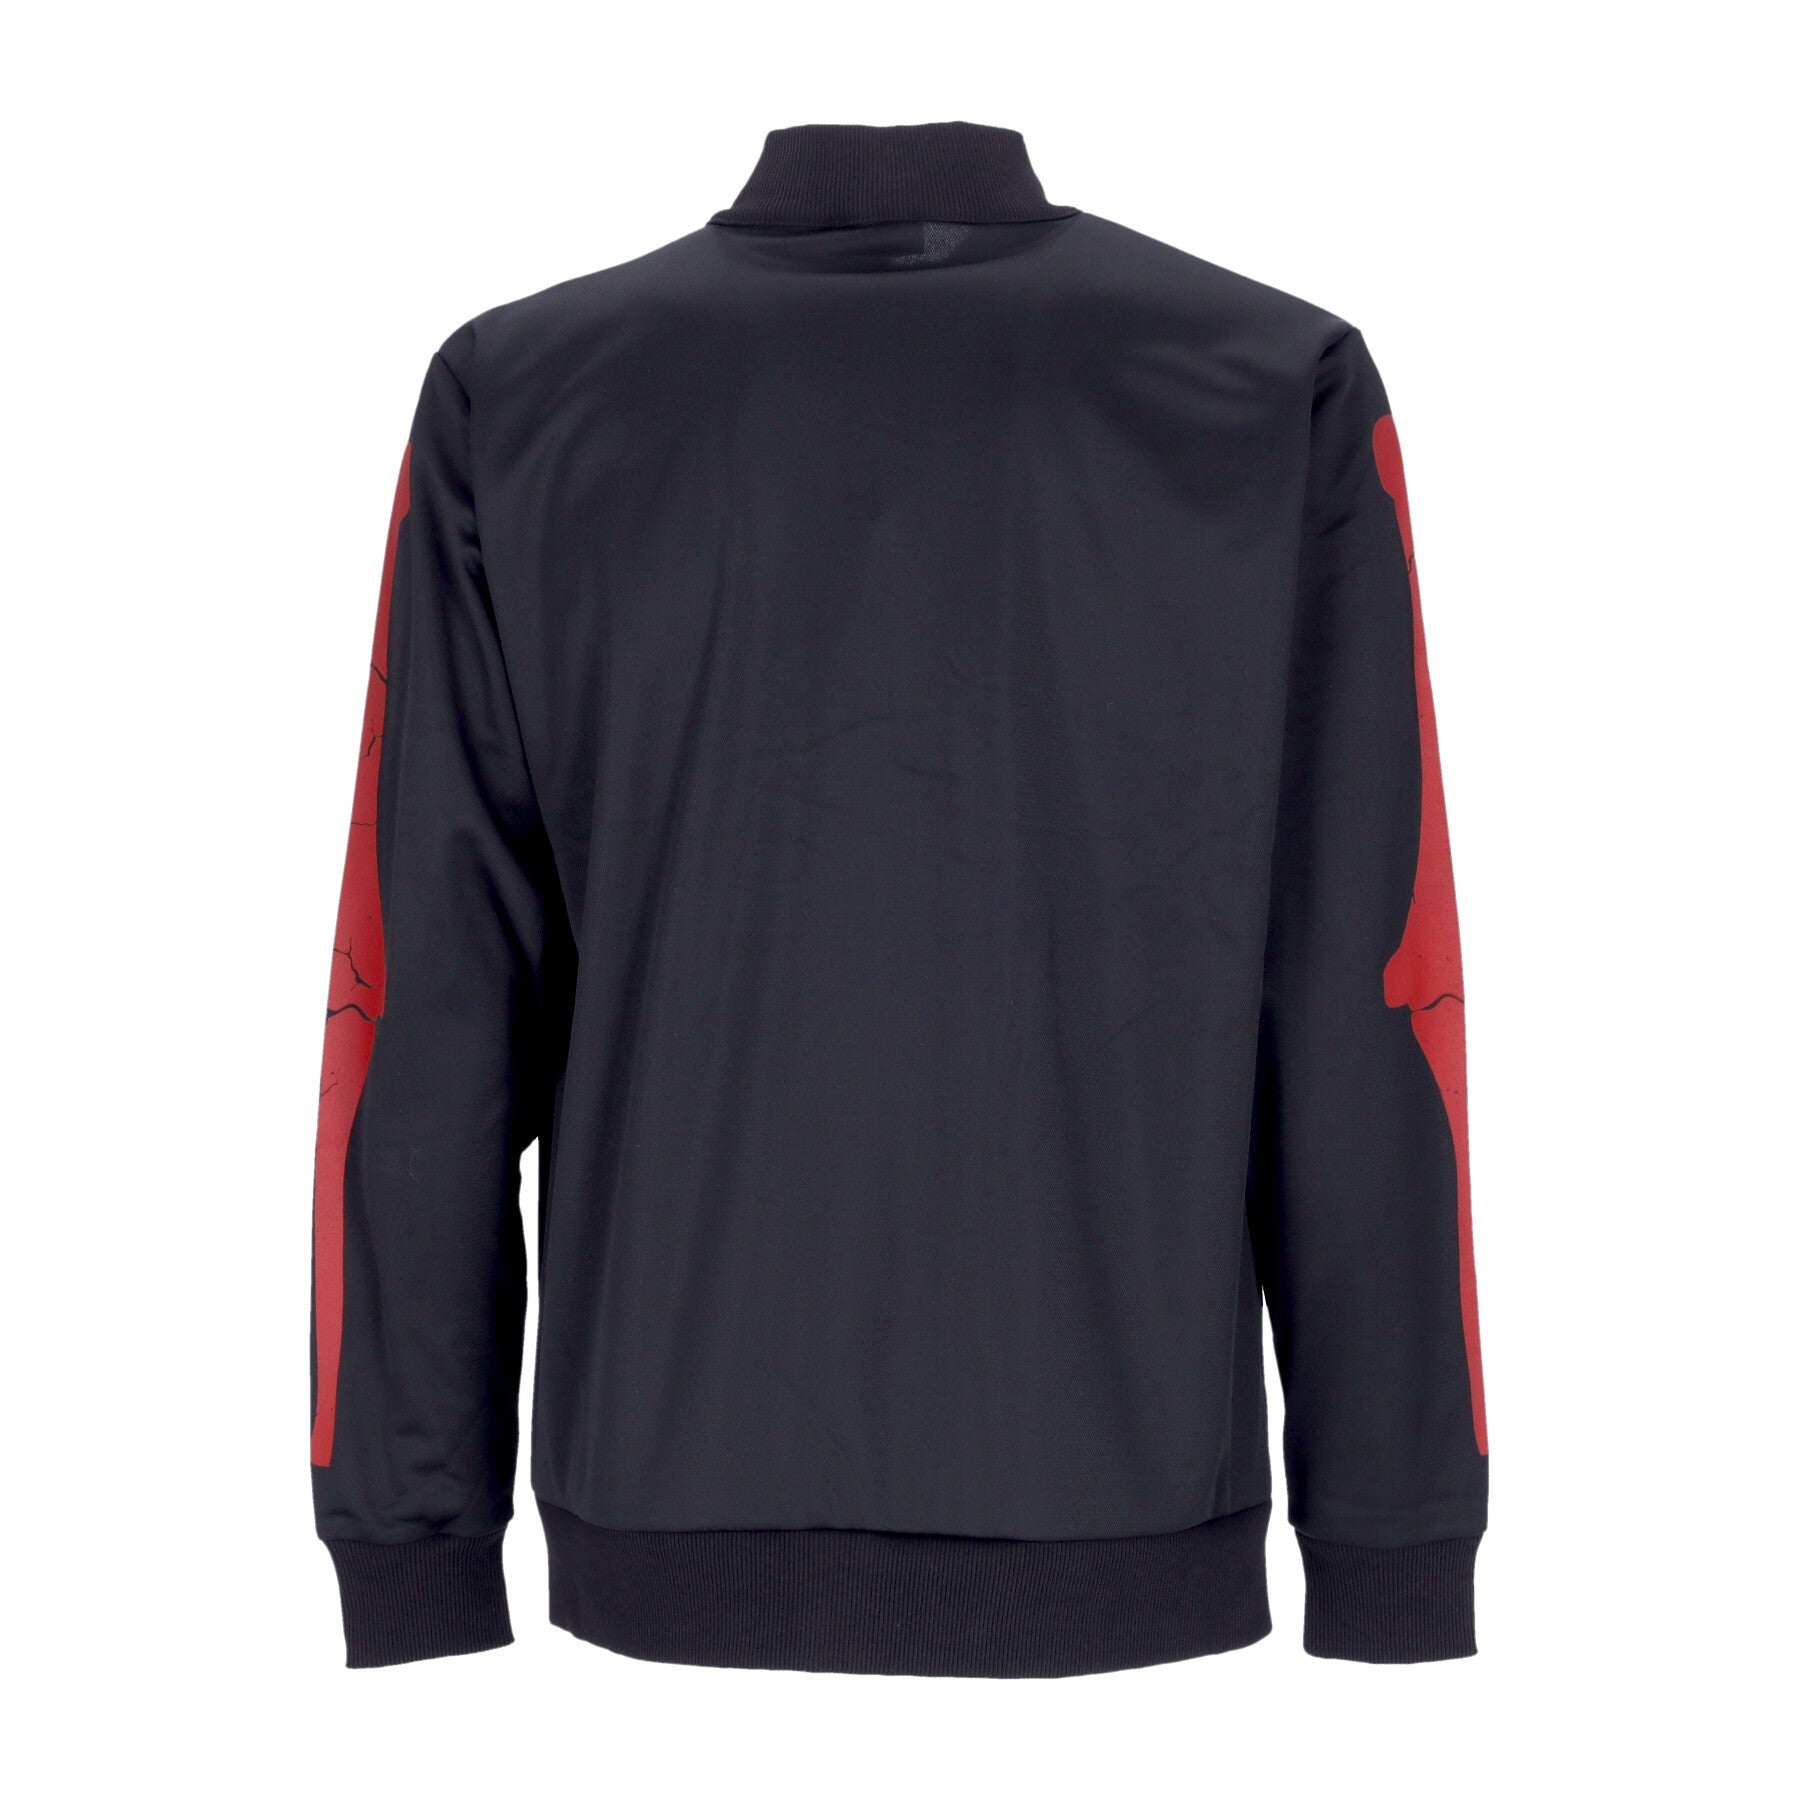 Men's Tracksuit Jacket Skeleton Print Sweatshirt Black/red